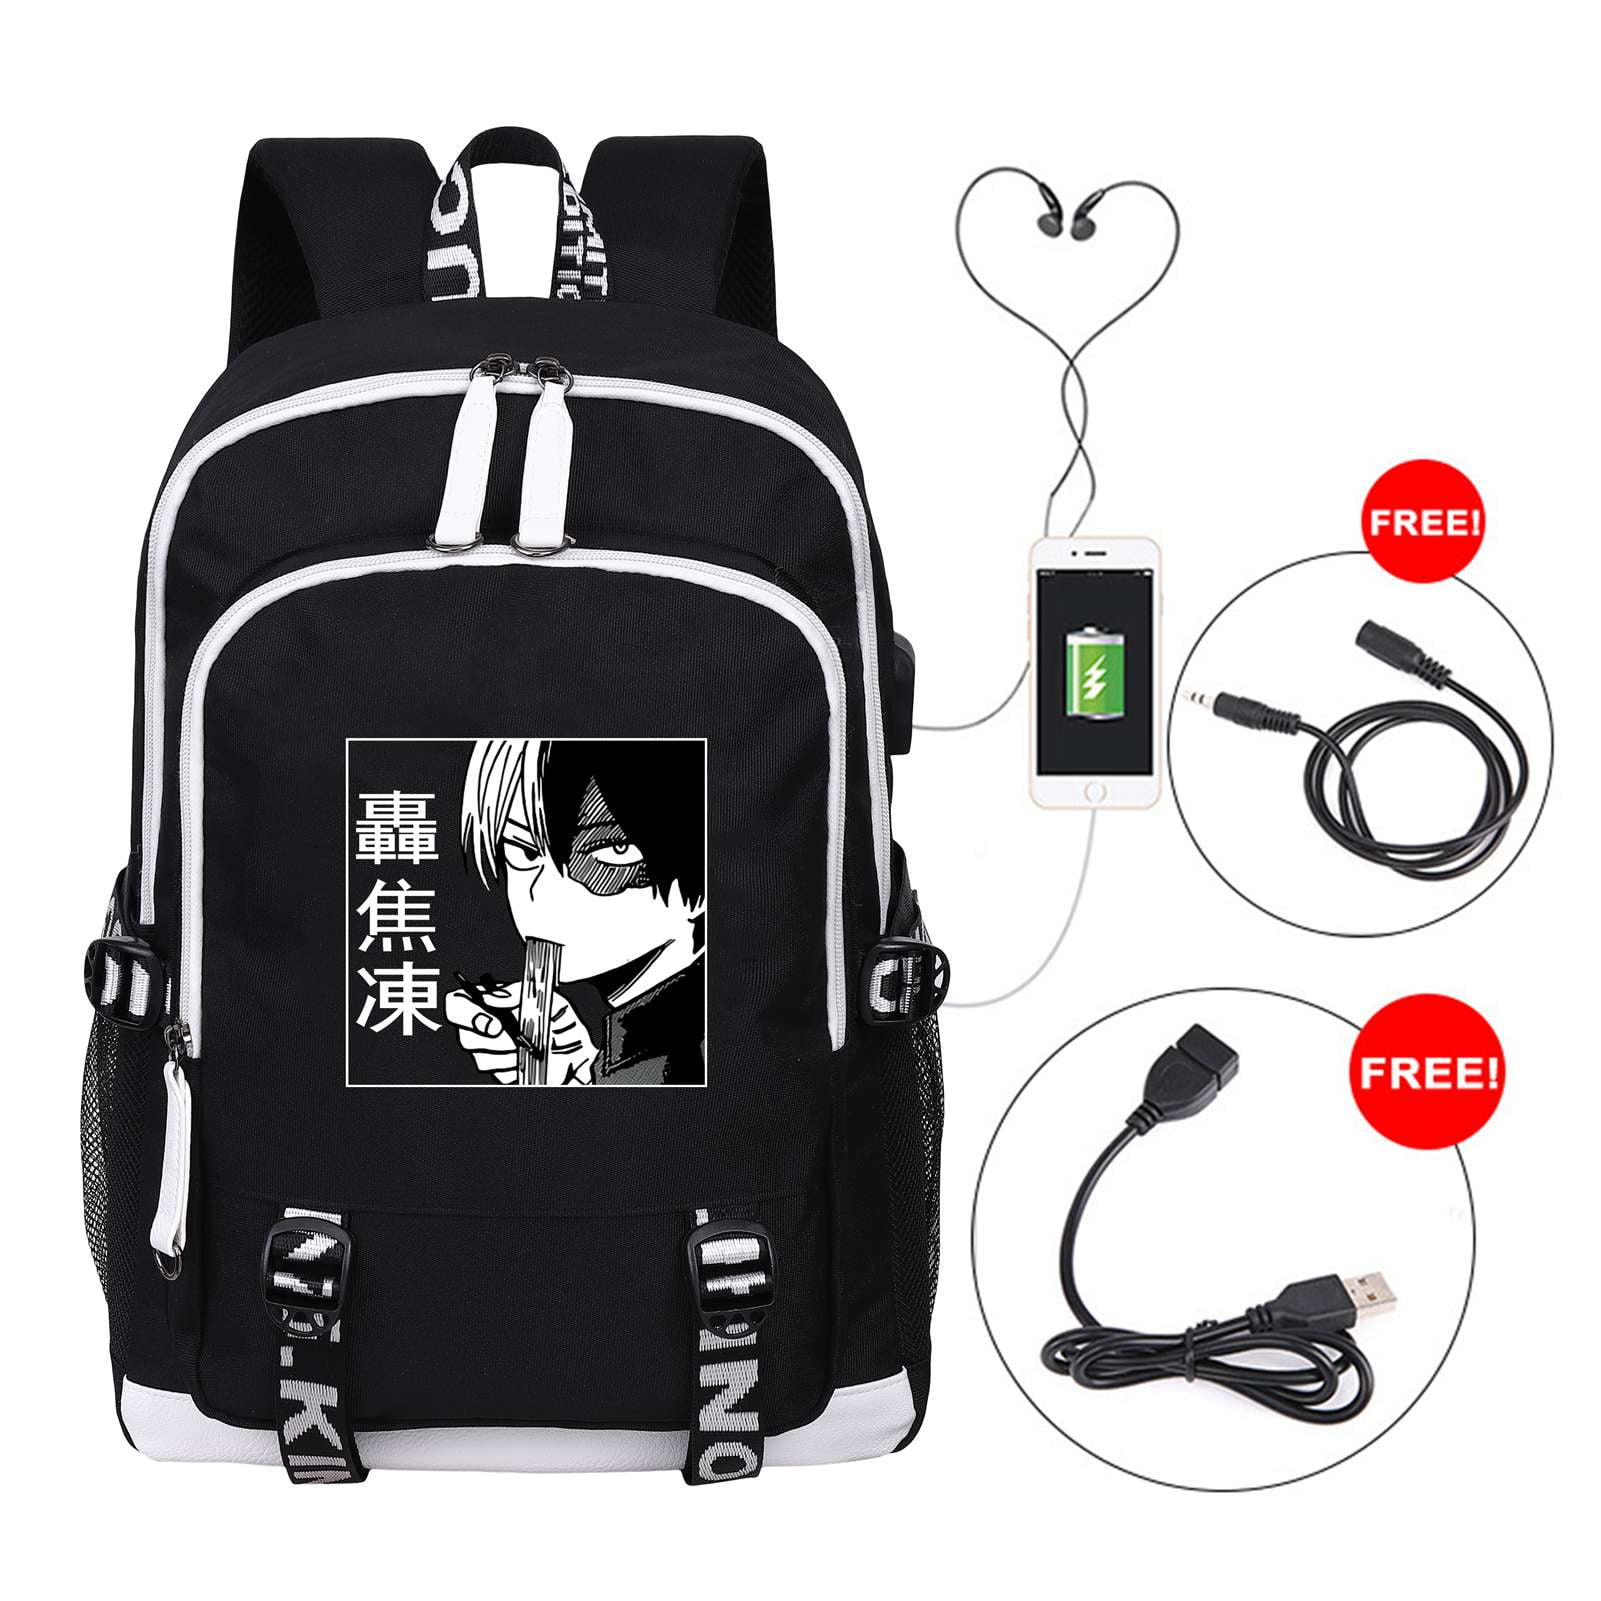 My Hero Academia Travel Laptop Backpack